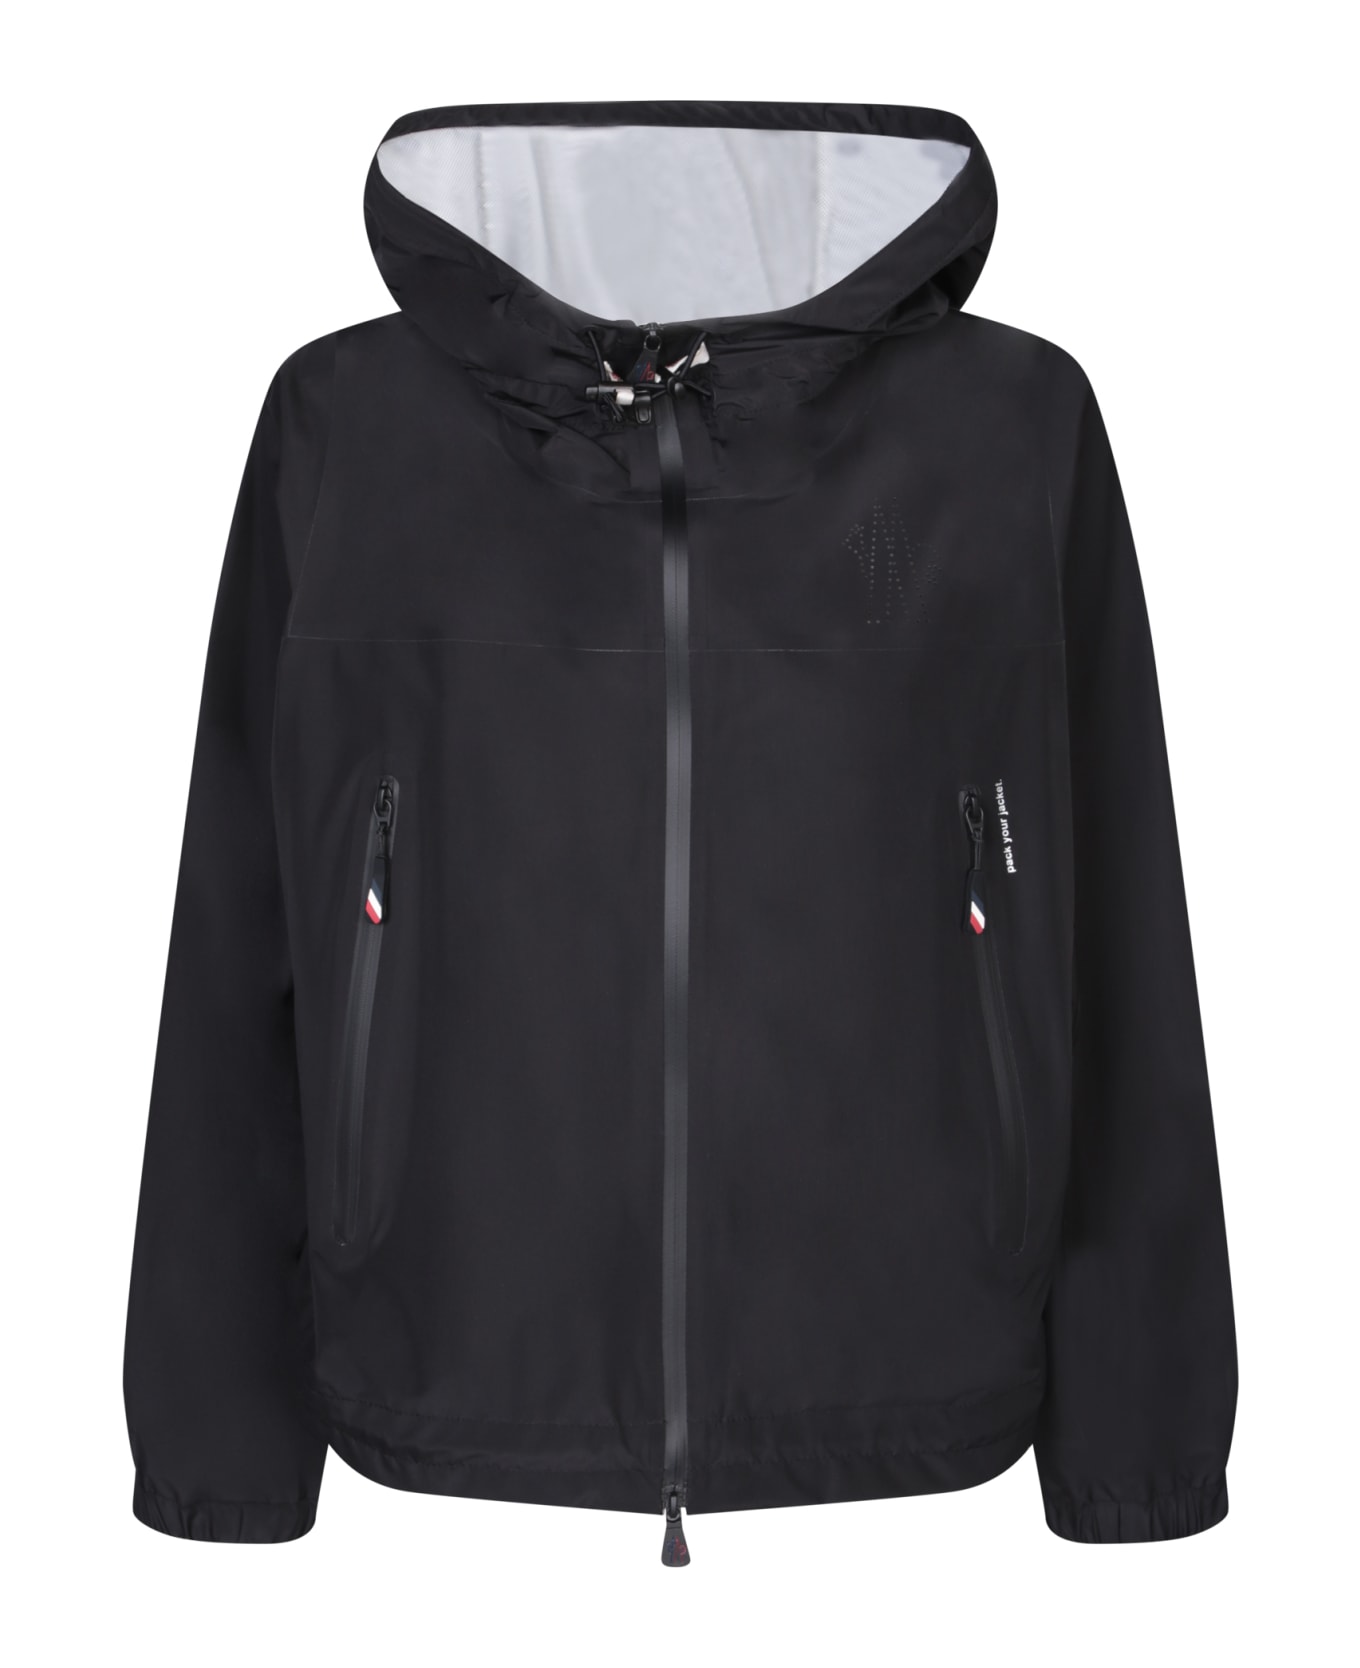 Moncler Grenoble Fanes Technical Fabric Jacket - Black